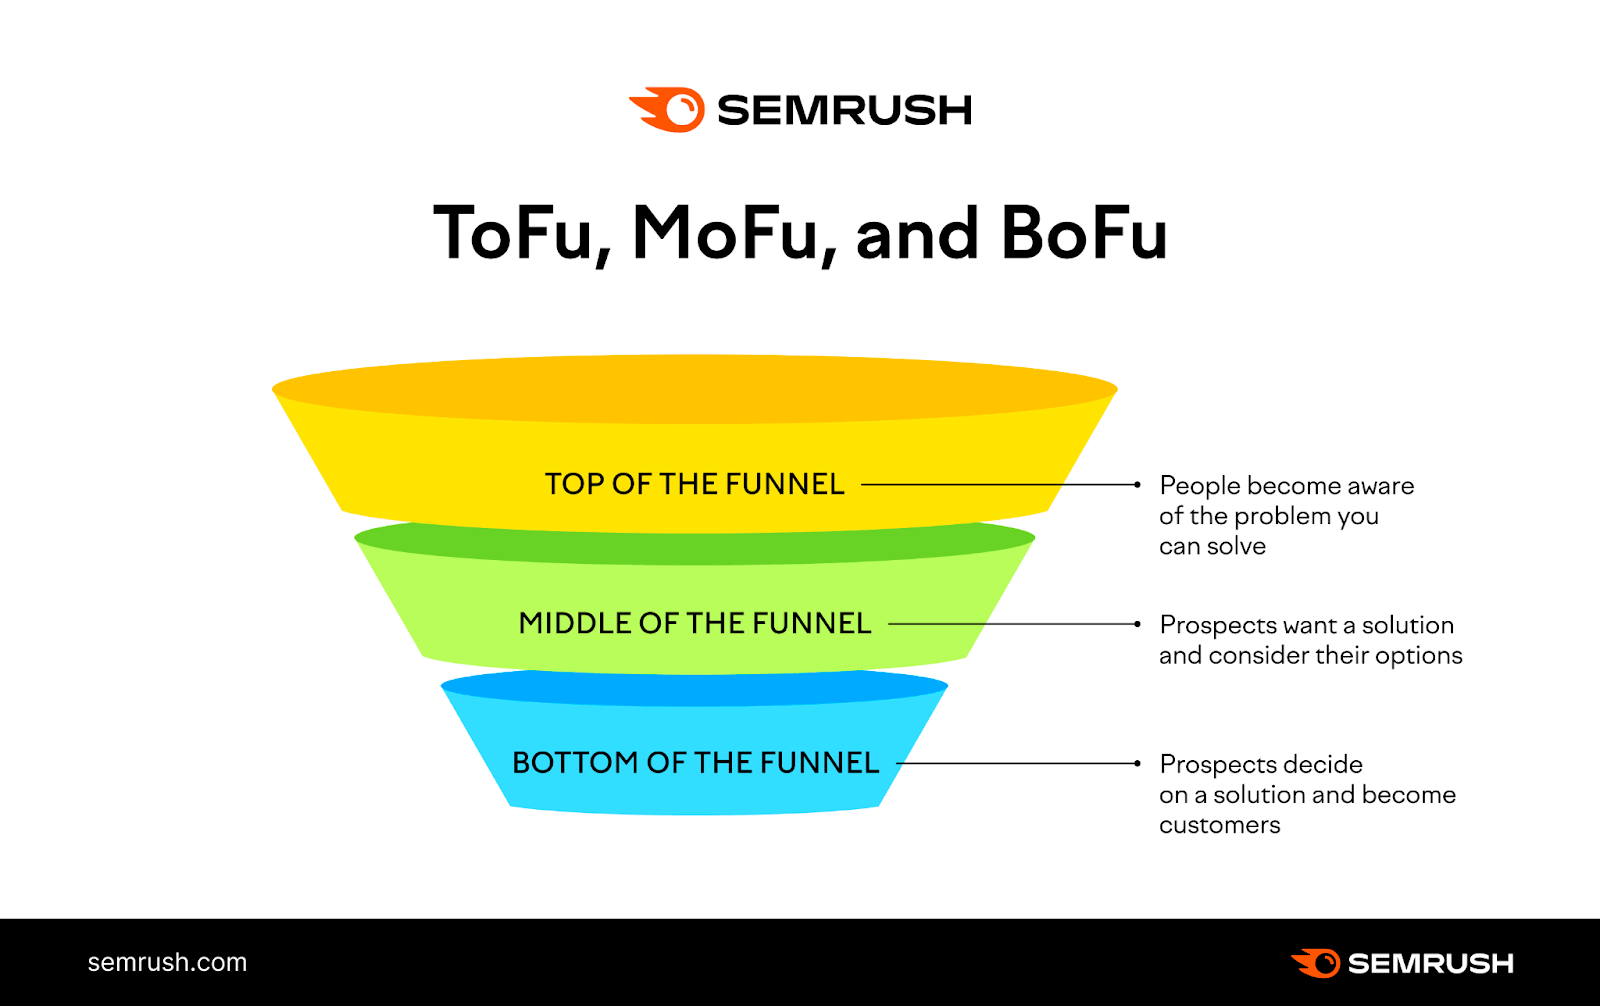 A ocular  of selling  funnel, explaining the ToFu, MoFu, and BoFu sections